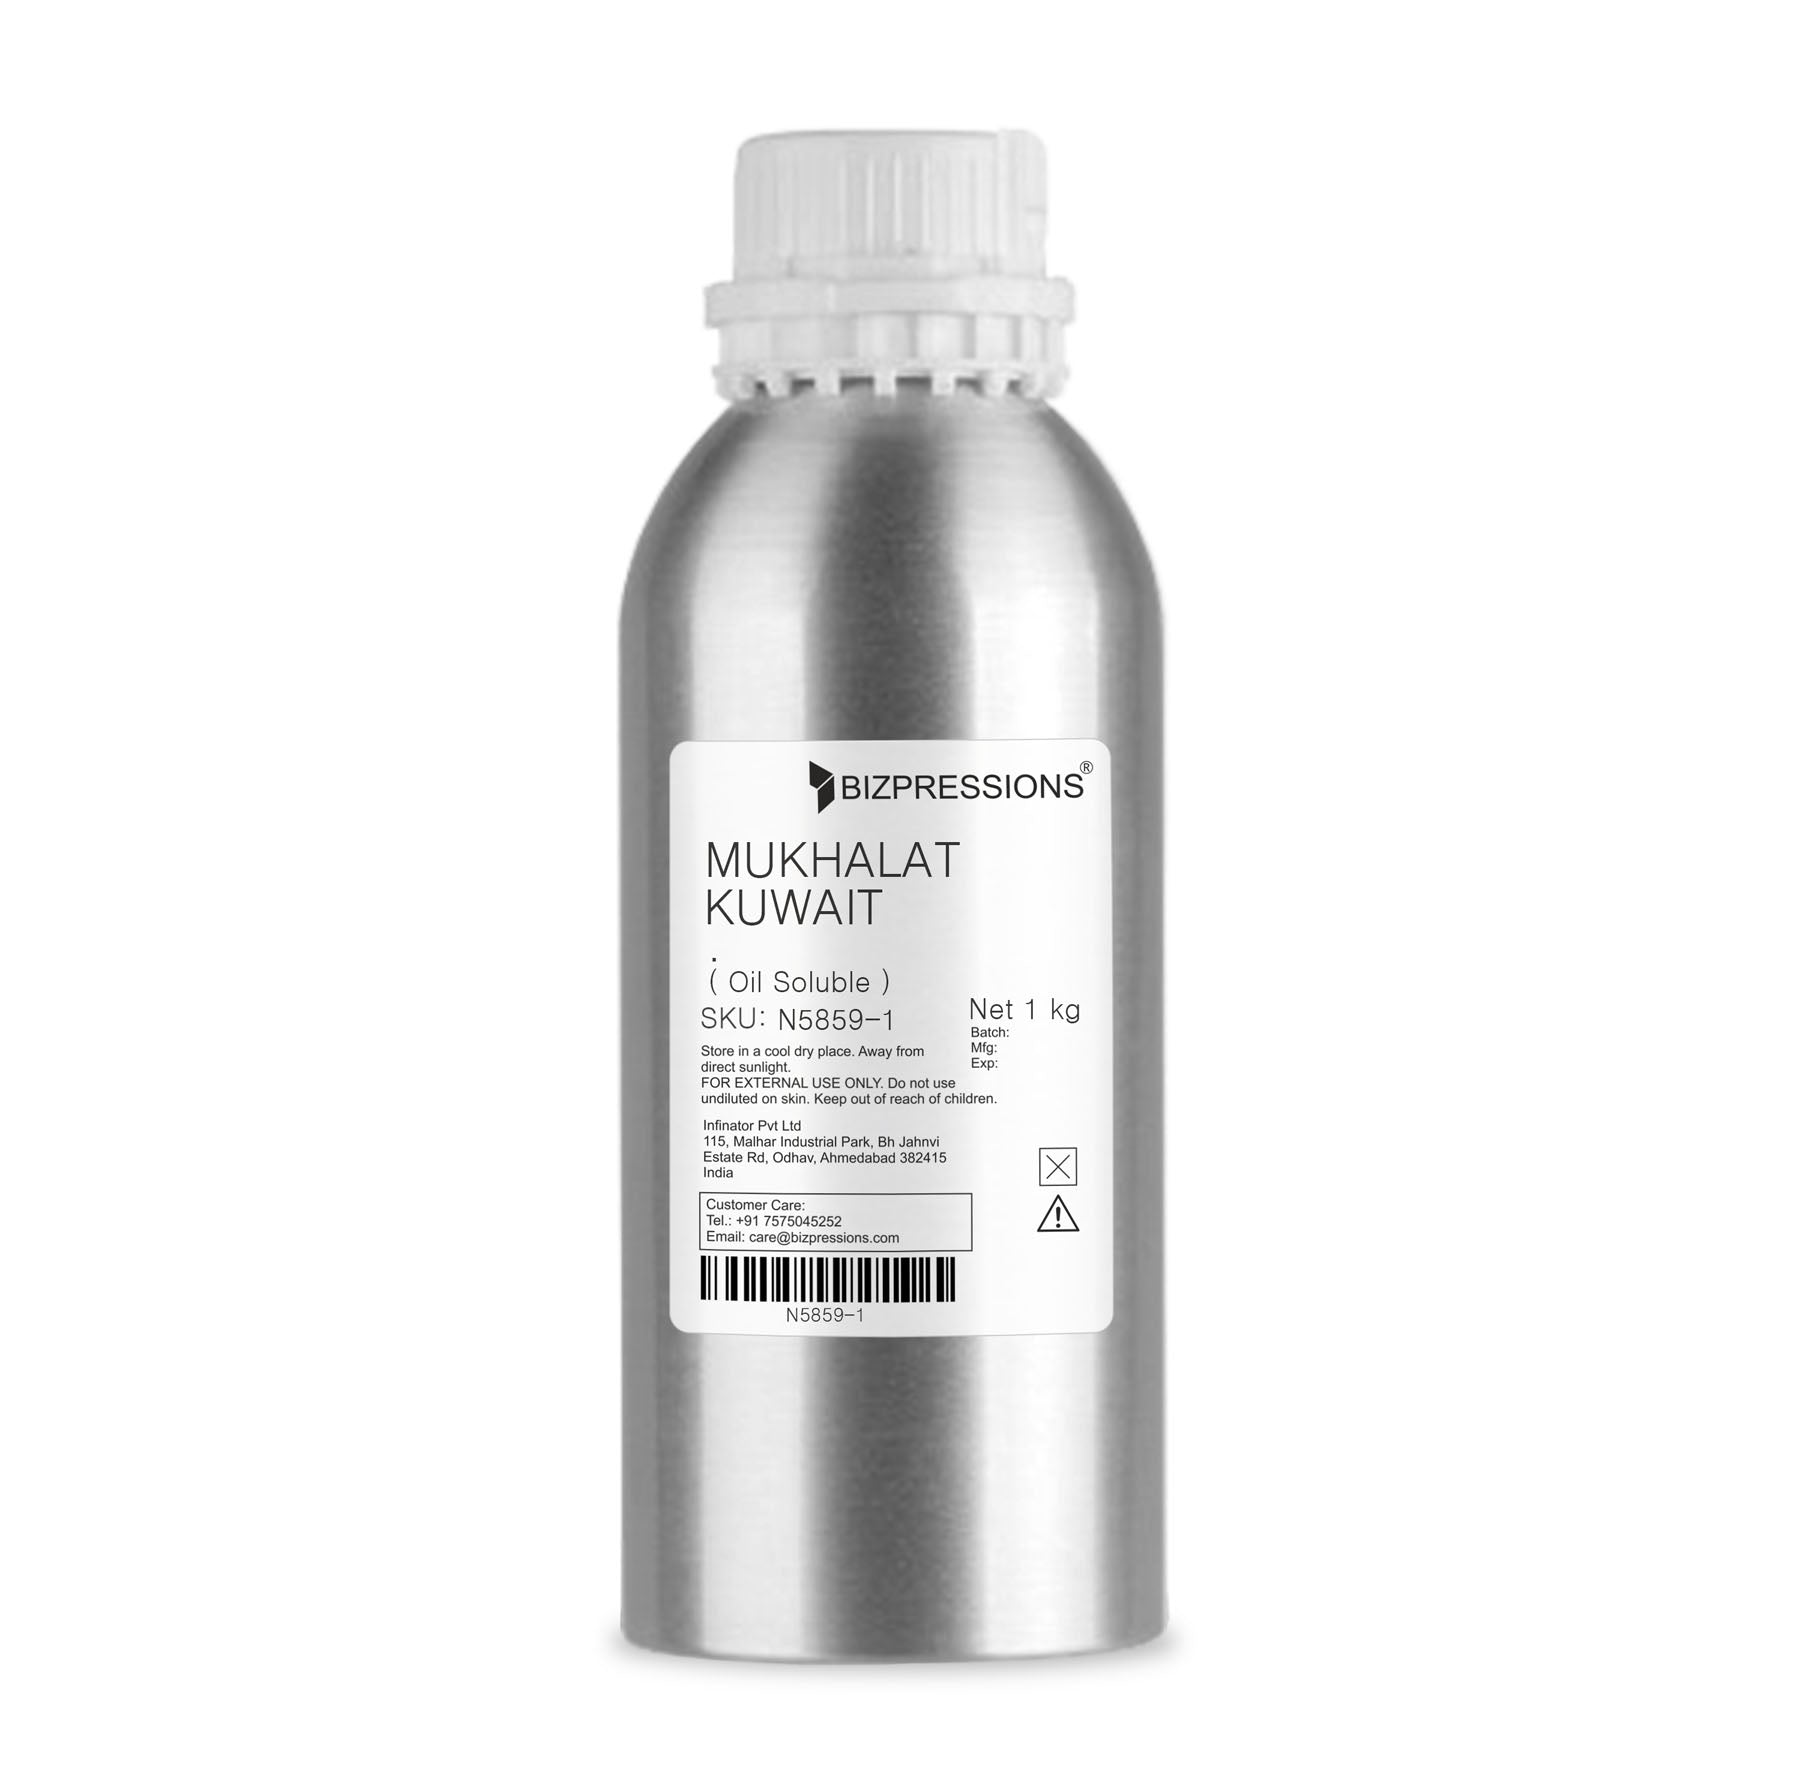 MUKHALAT KUWAIT - Fragrance ( Oil Soluble ) - 1 kg